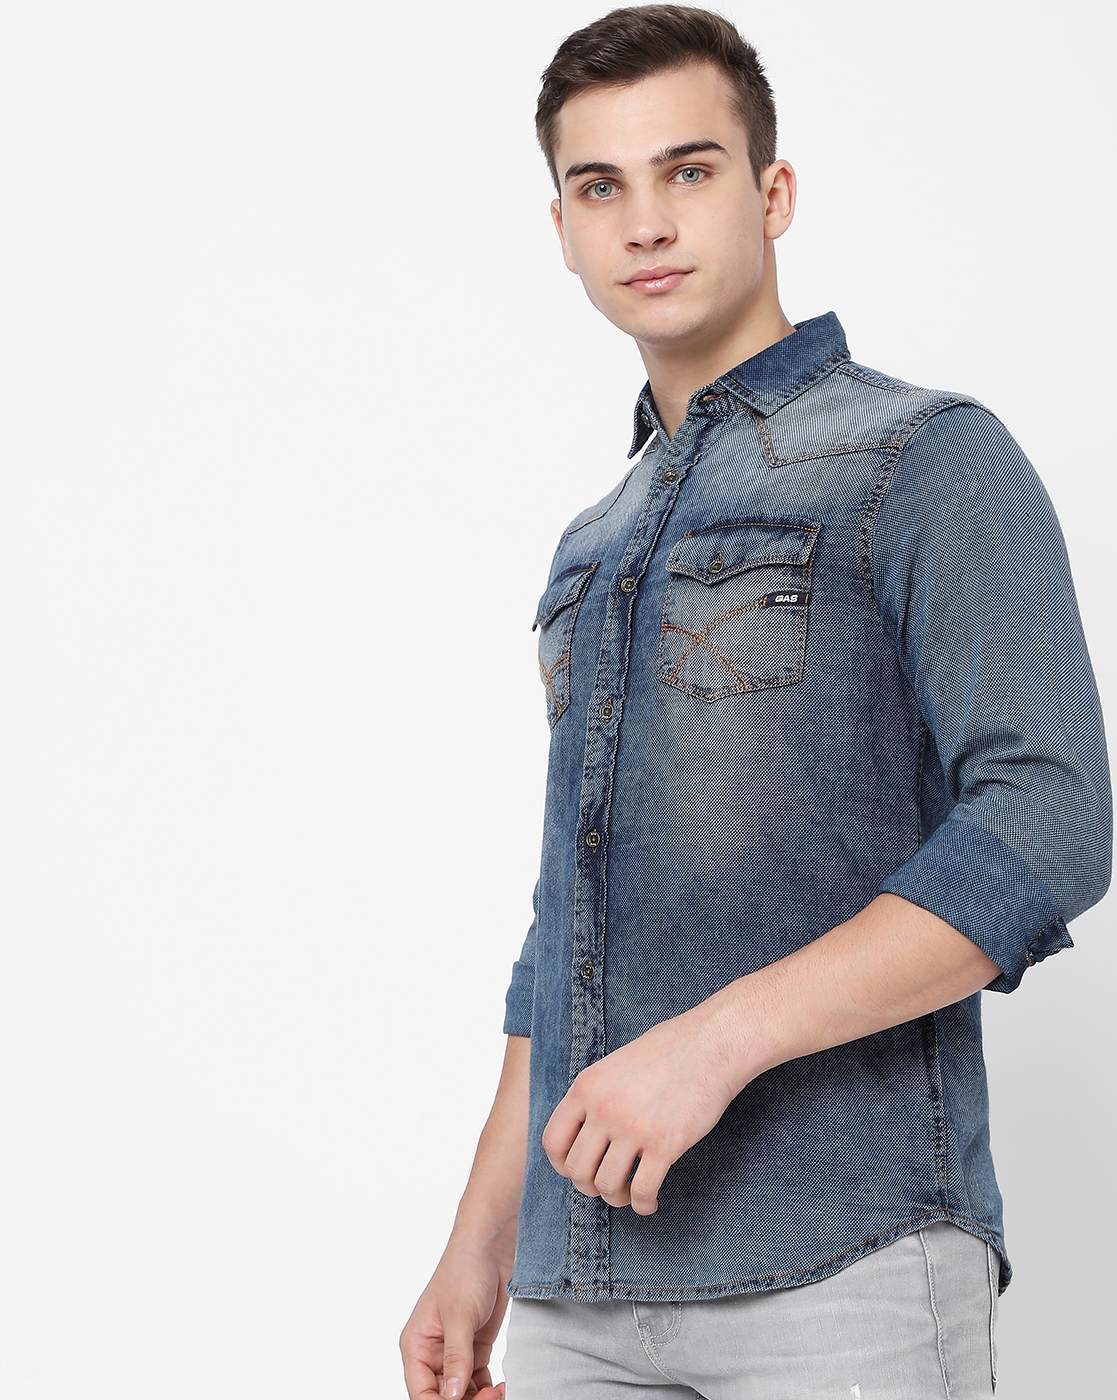 Denim Shirts for Men: Buy Men's Denim Jeans shirts Online | GAS Jeans